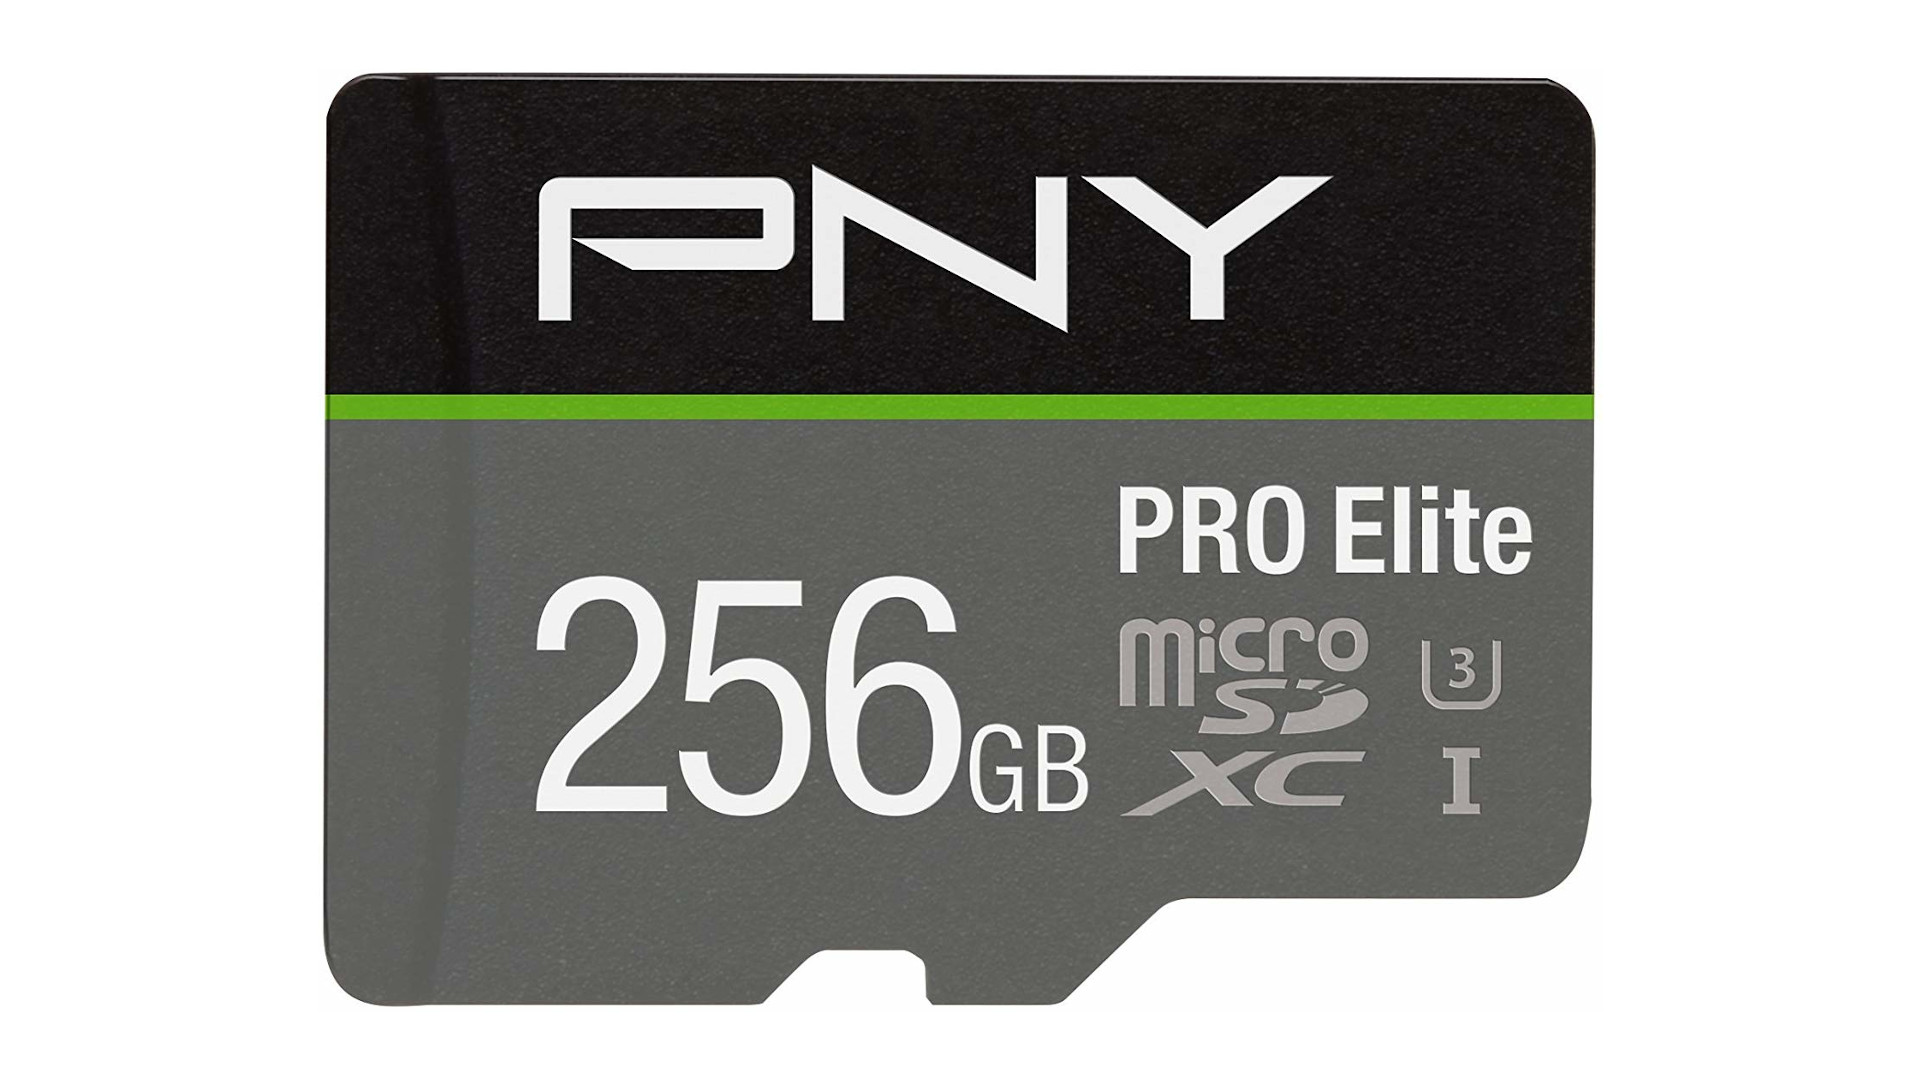 PNY PRO Elite 256GB micro SD card